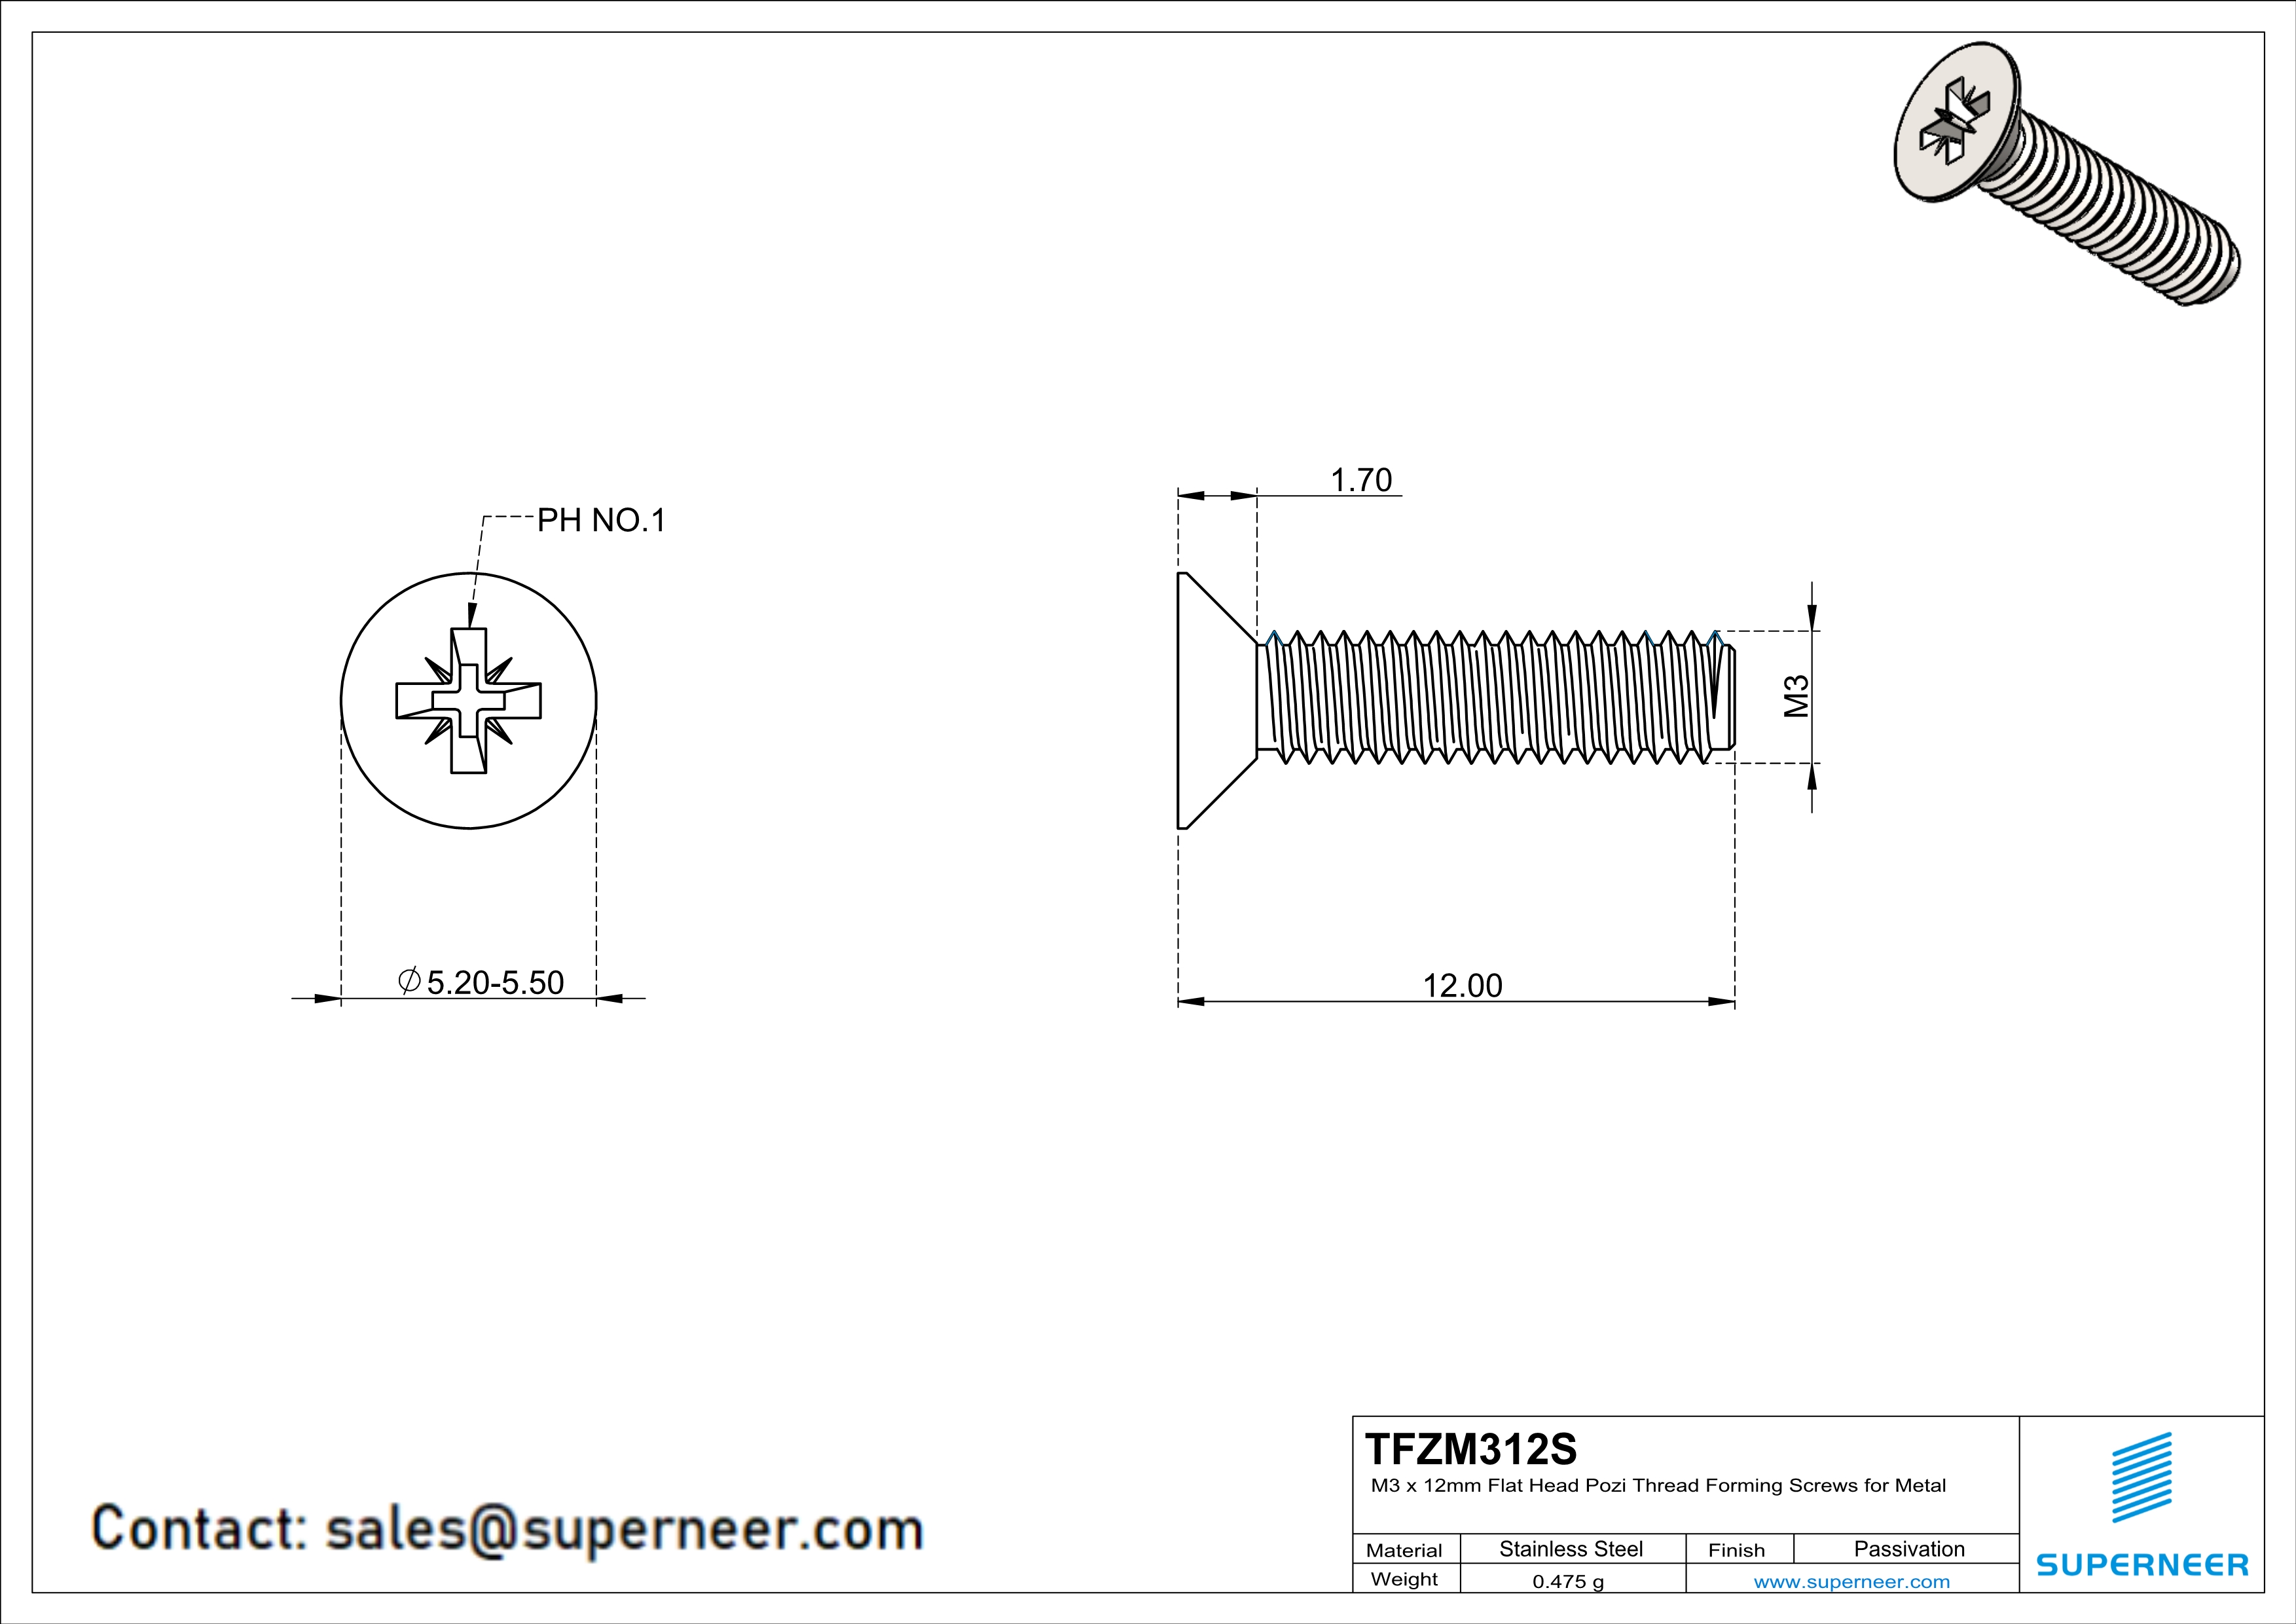 M3 × 12mm Flat Head Pozi Thread Forming Screws for Metal SUS304 Stainless Steel Inox